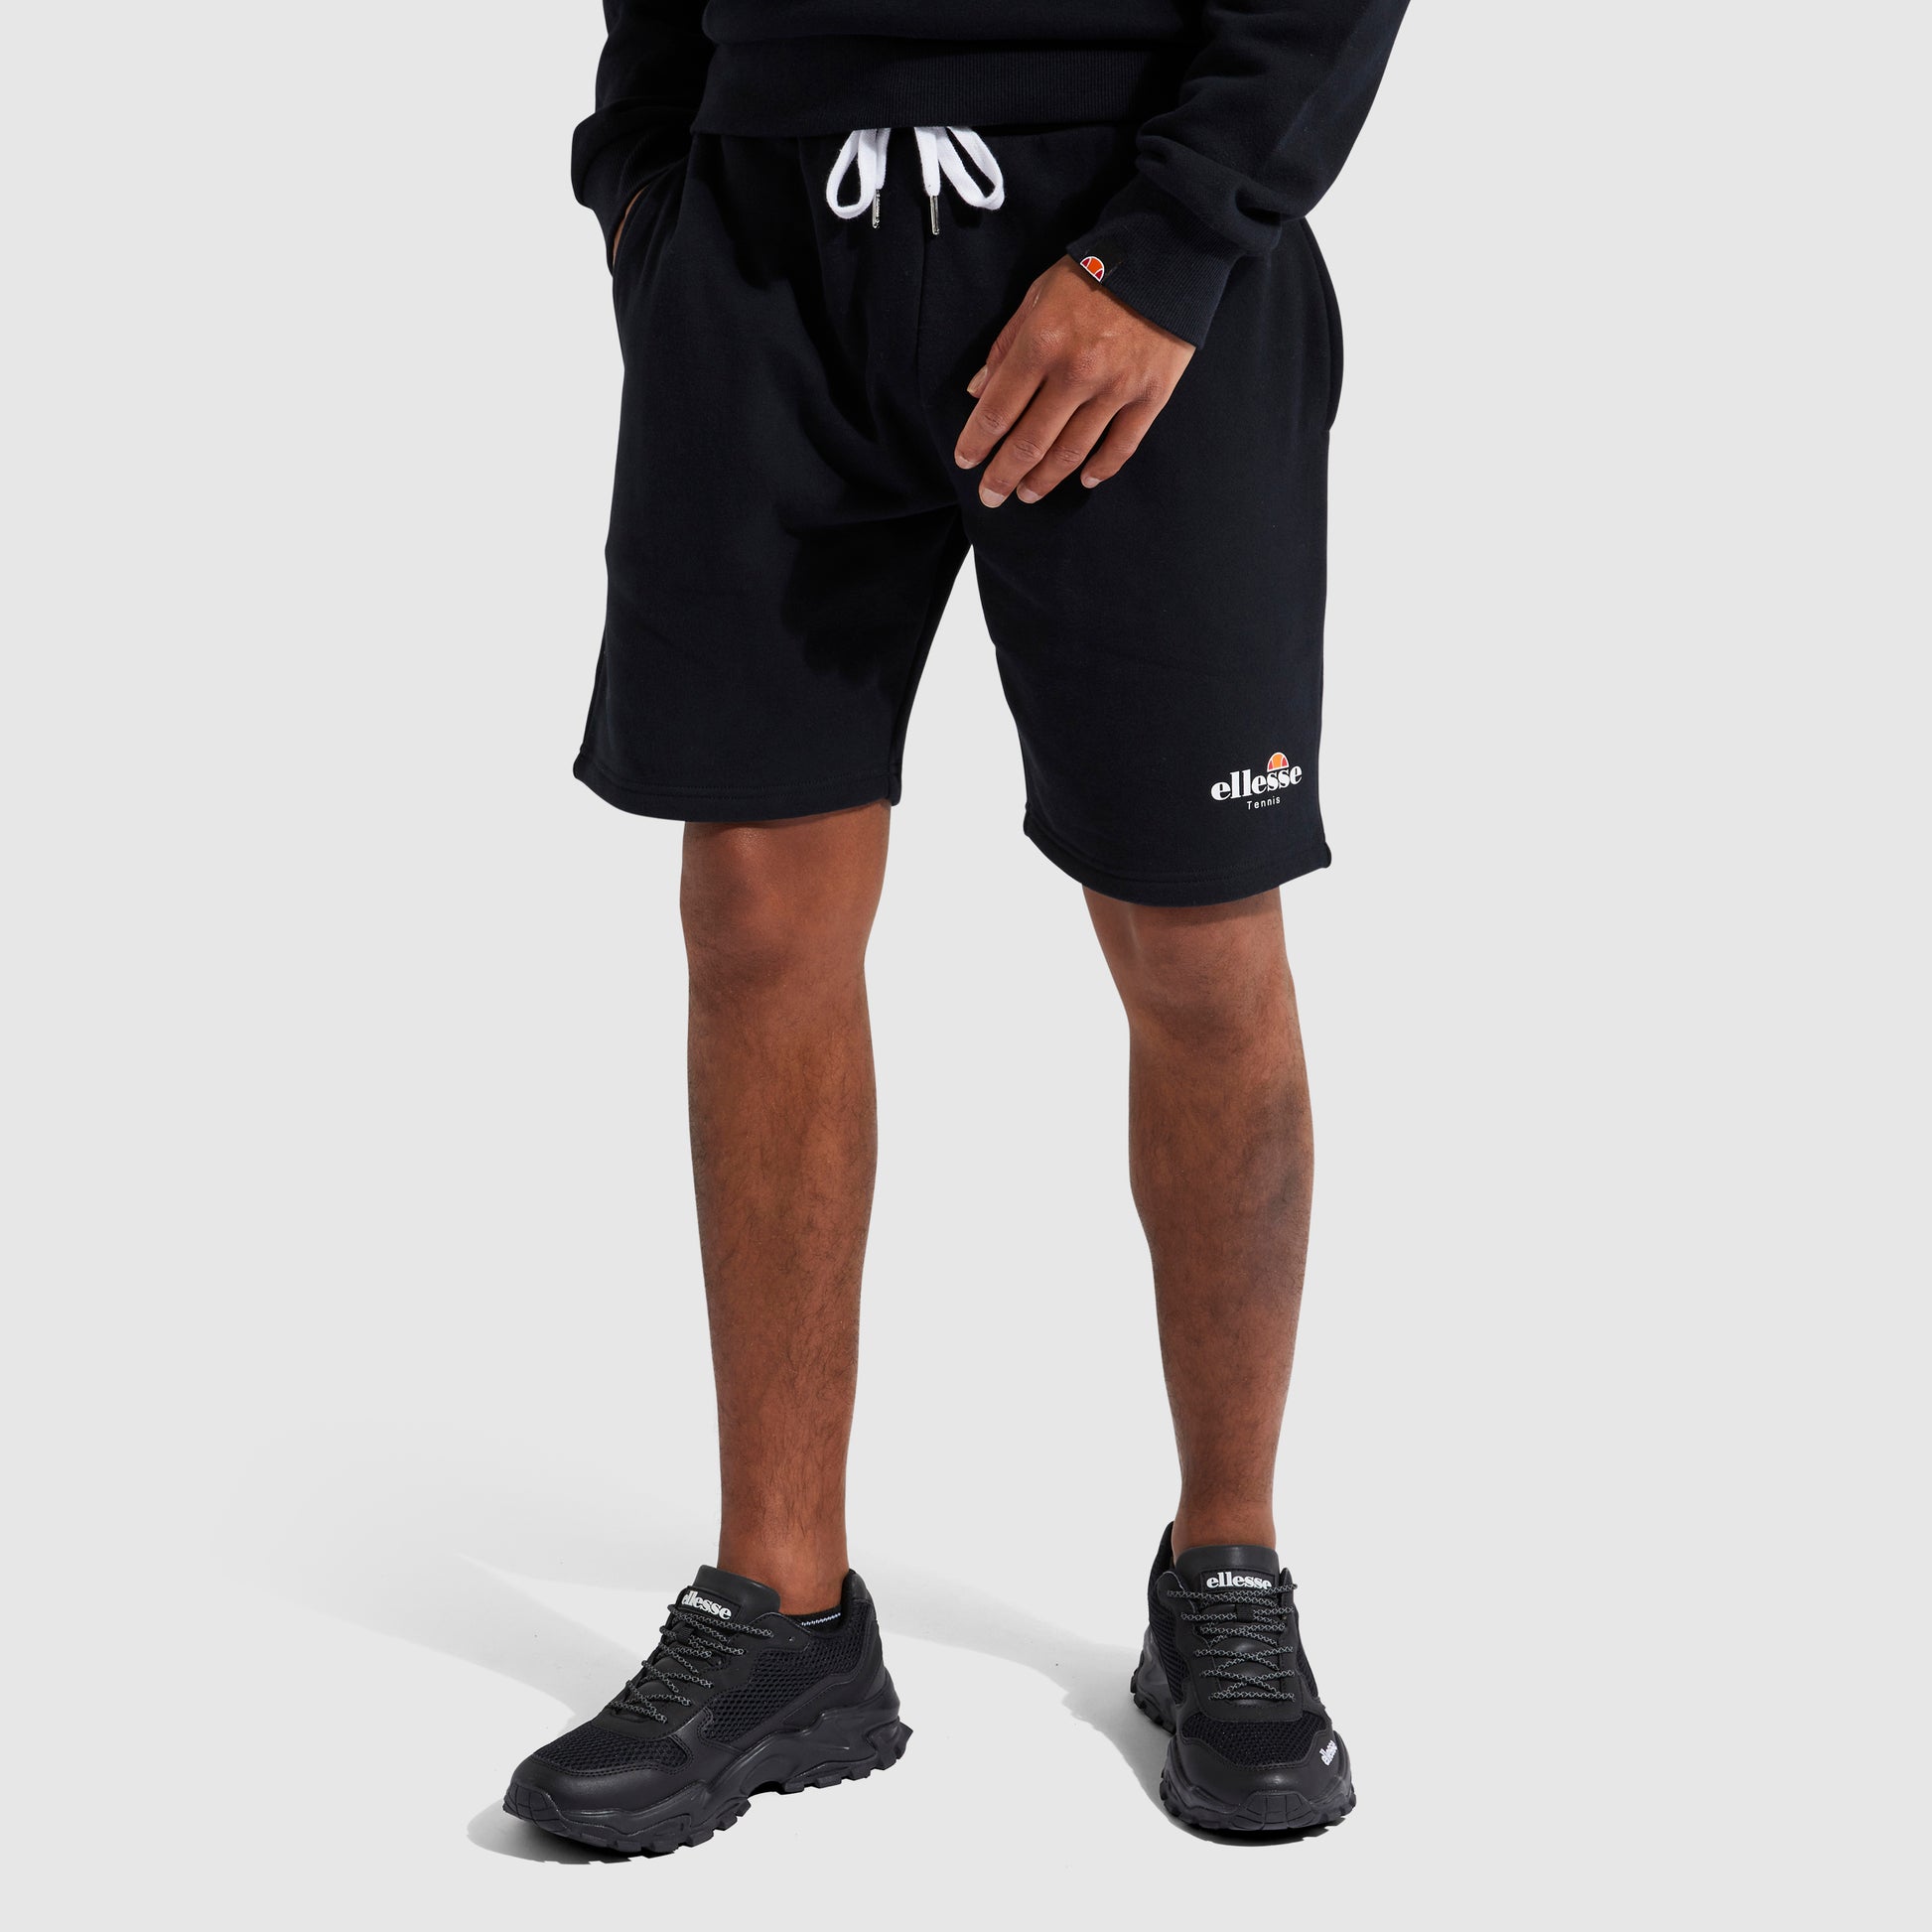 ellesse Tennis Men\'s – Sweat Brands Shorts NewCo